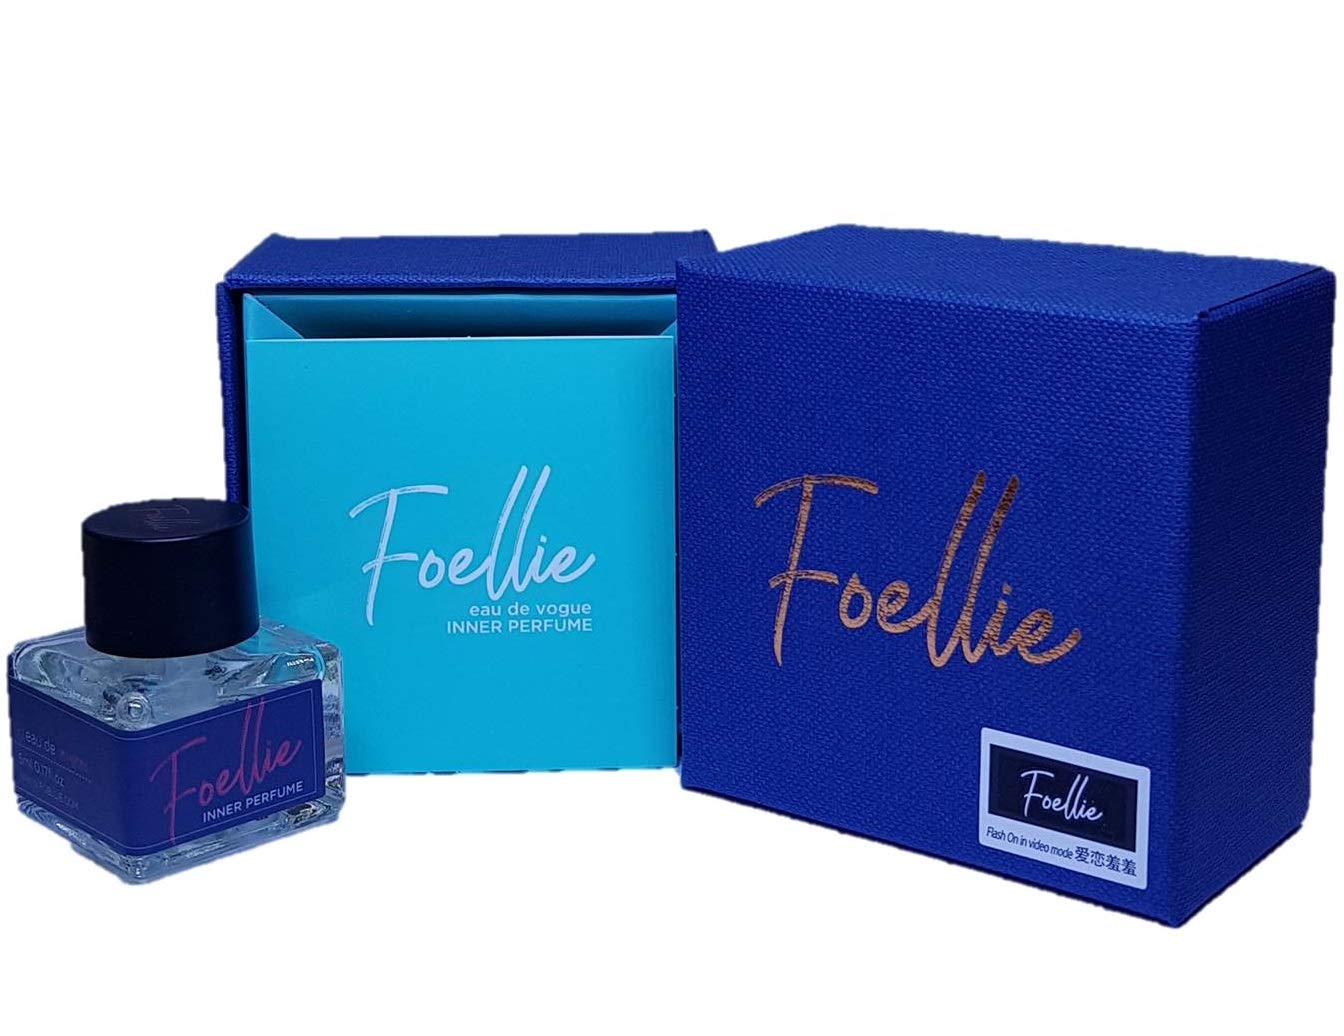 [Follie] eau de vogue - Feminine Inner Beauty Perfume (for Underwear), Fresh Sea Scents Fragrance,